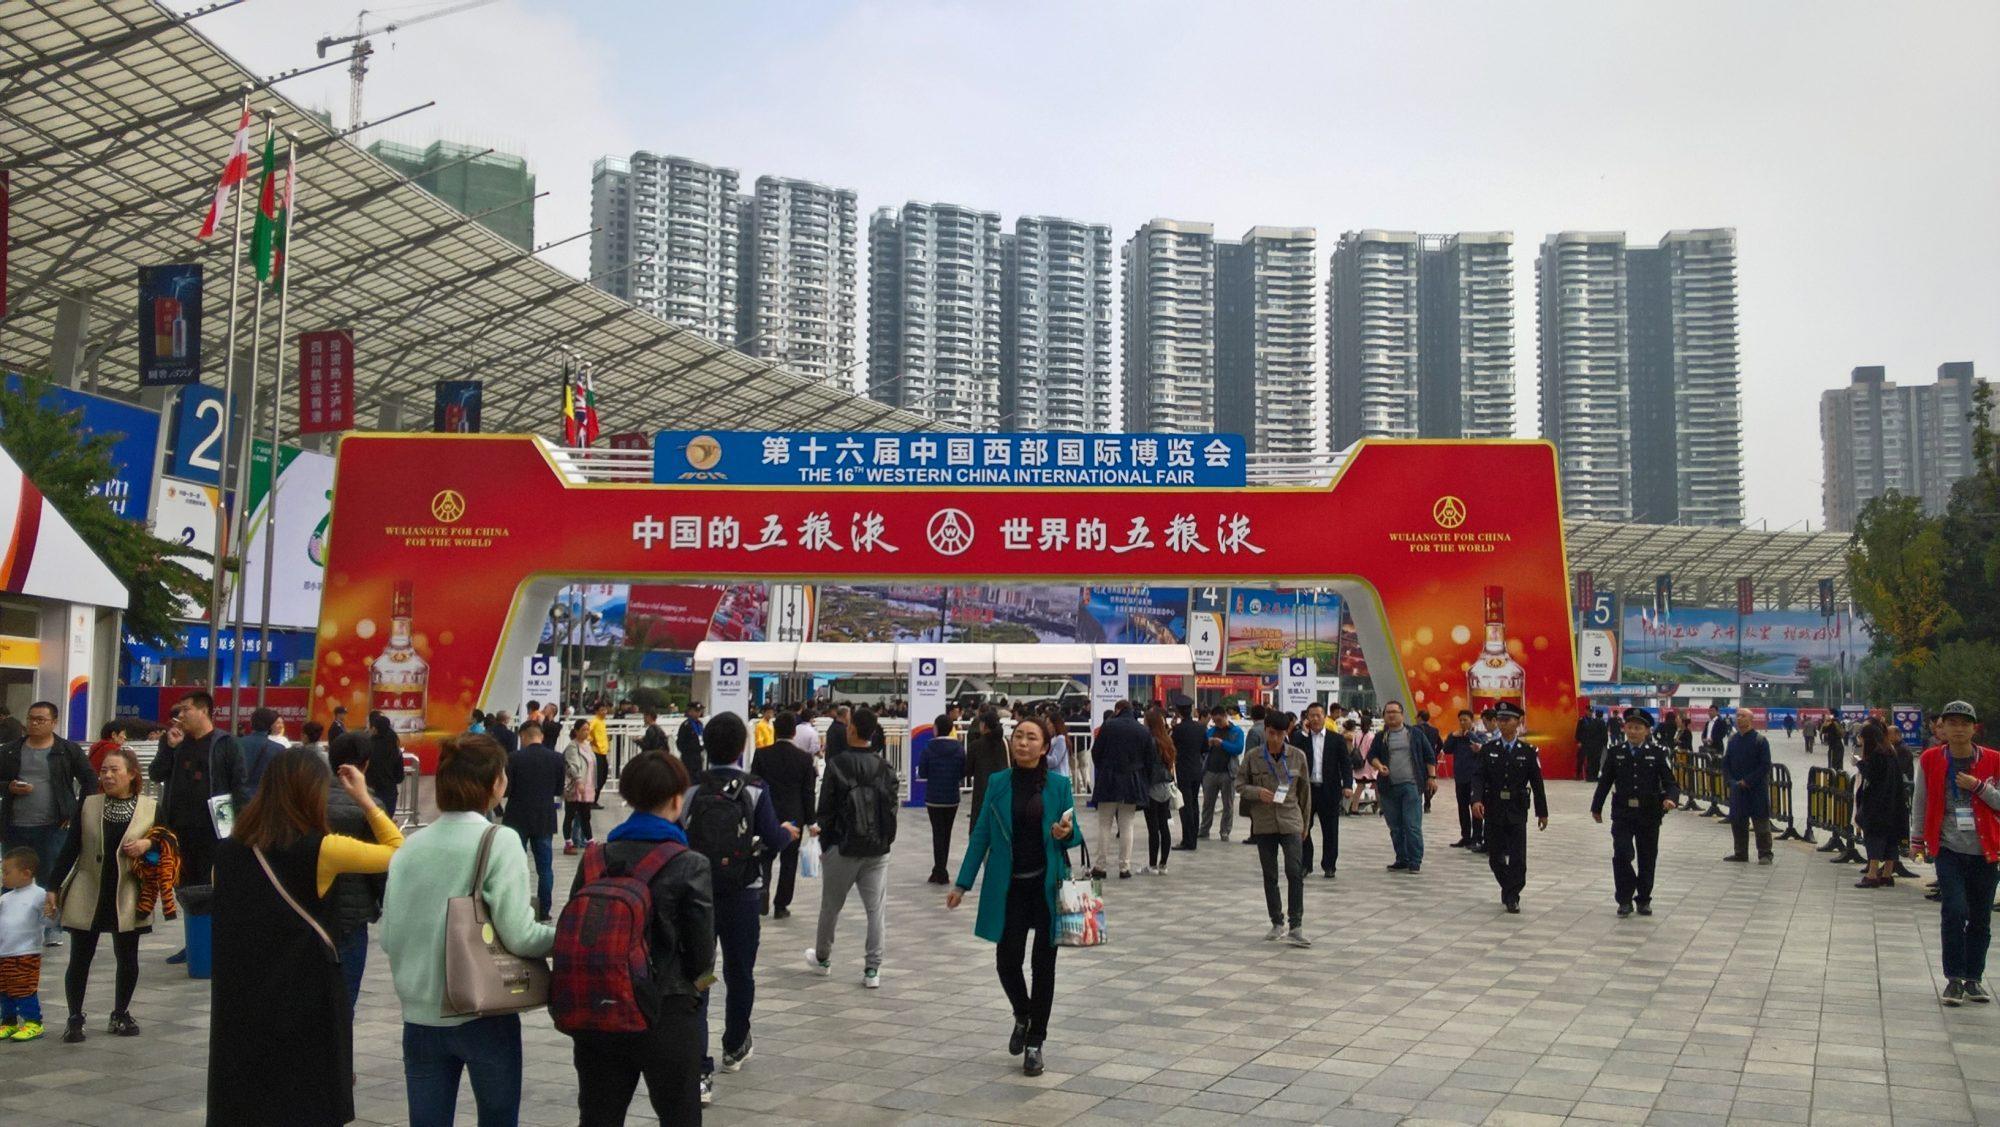 Western China International Fair 